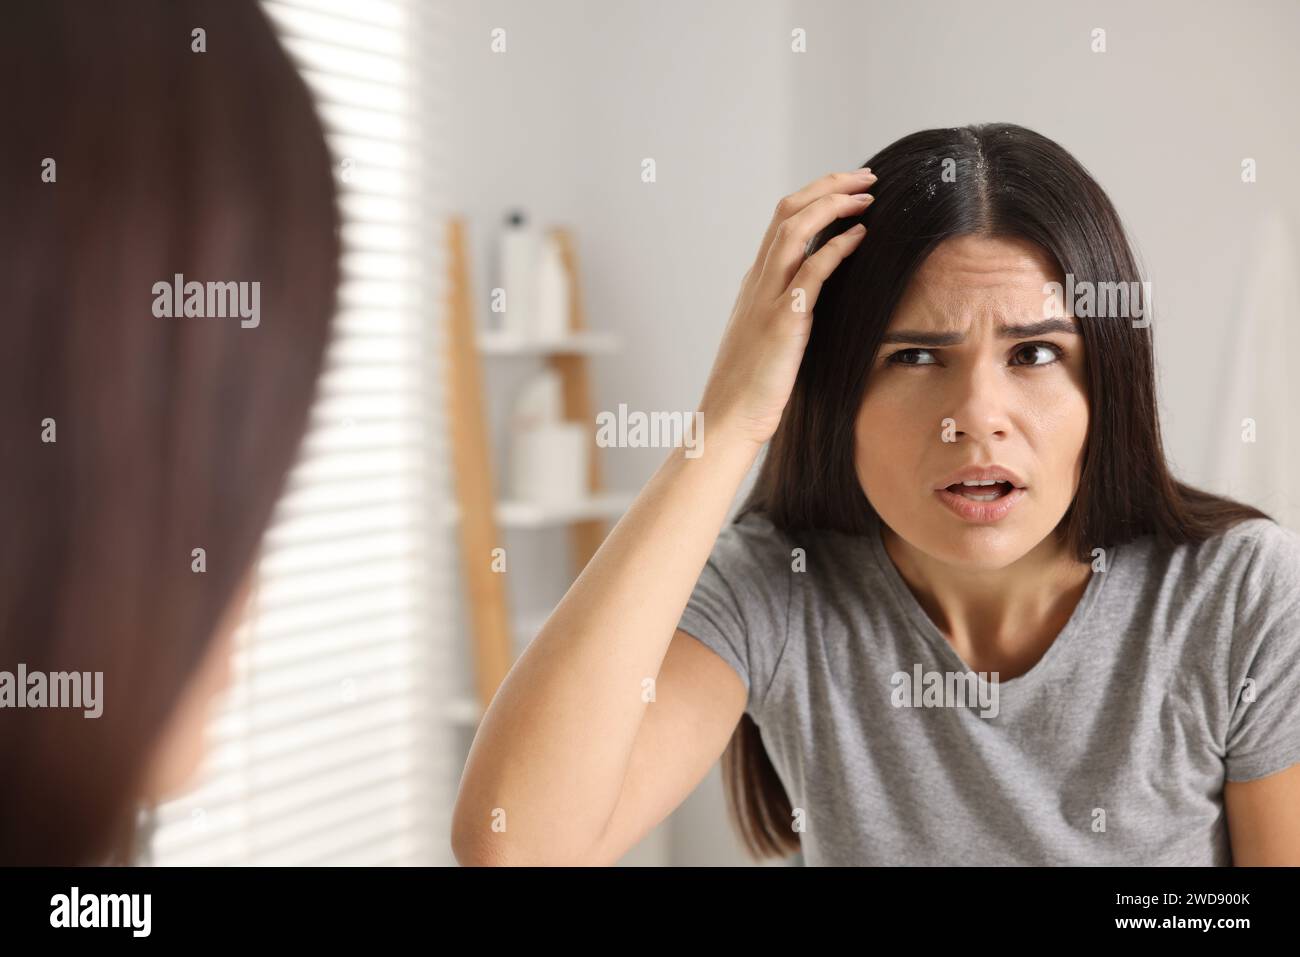 Emotional woman examining her hair and scalp near mirror in bathroom. Dandruff problem Stock Photo